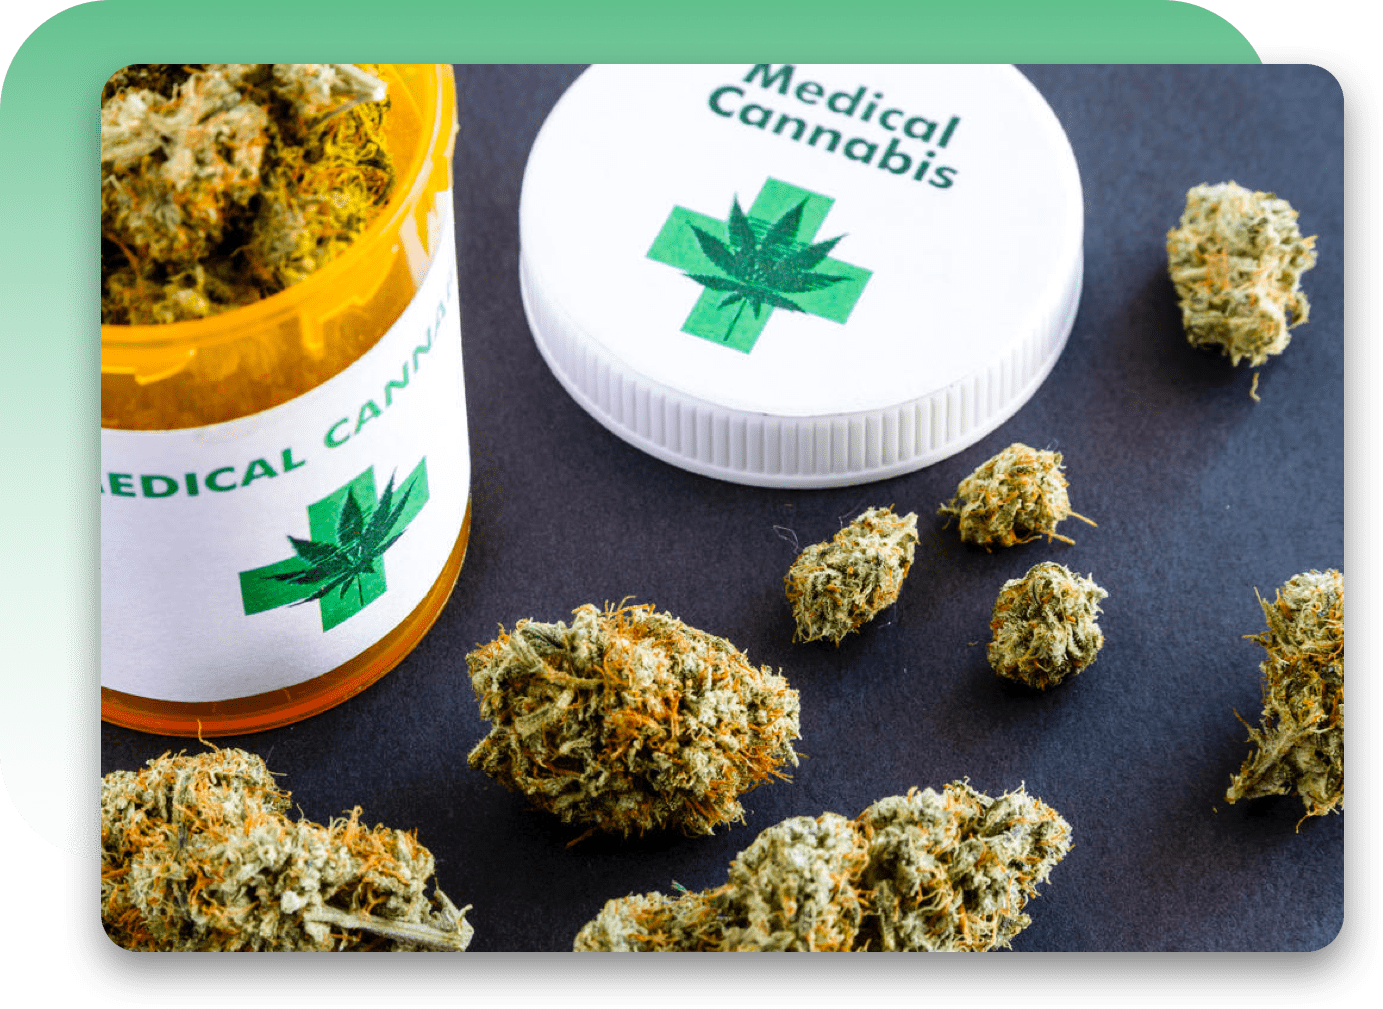 Medical Cannabis on Table | A Green Relief | Orlando Medical Marijuana Doctor